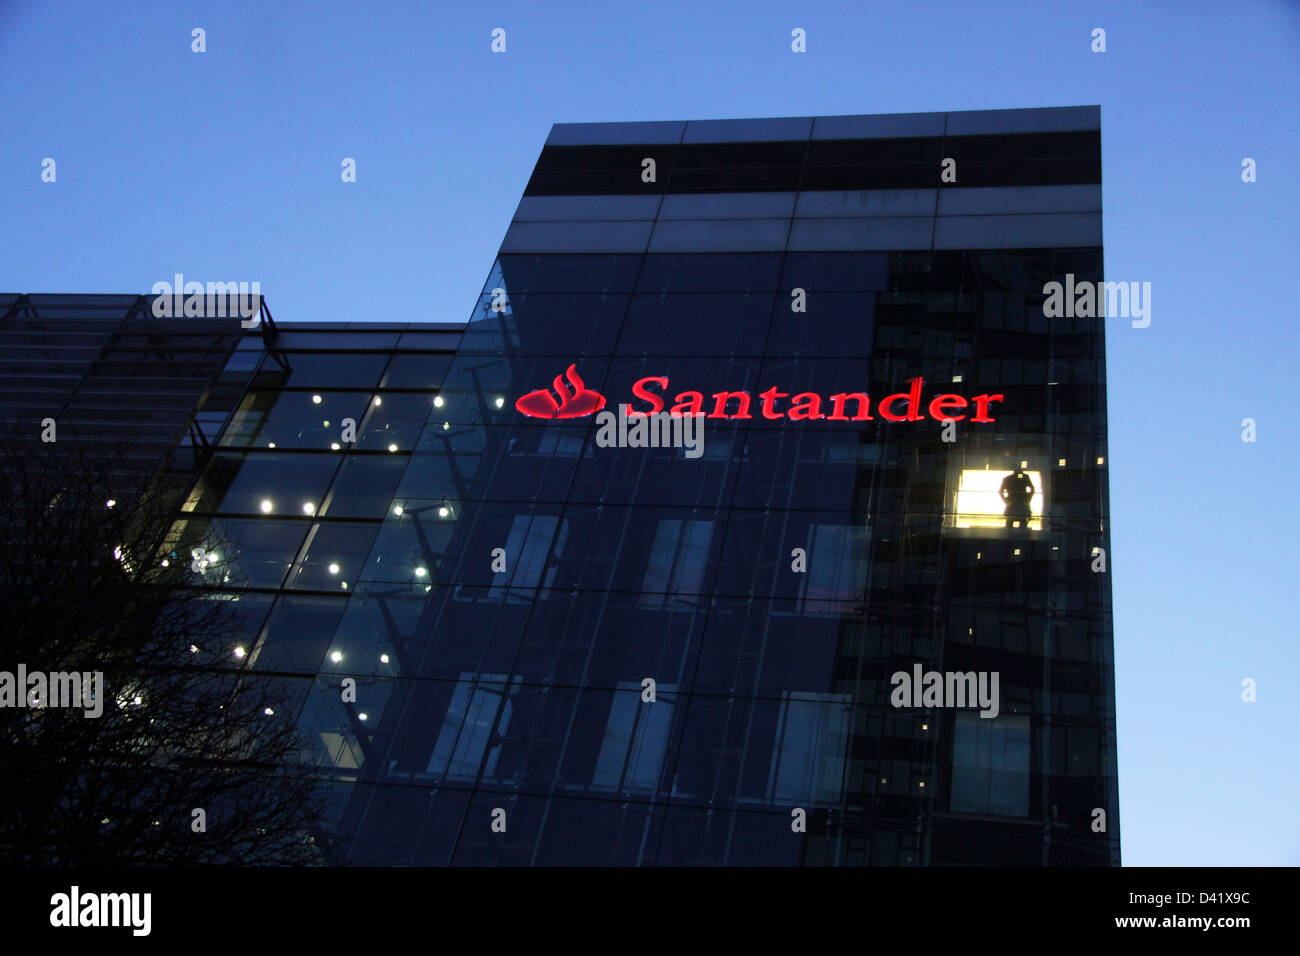 The Santander bank head office in Euston, London Stock Photo